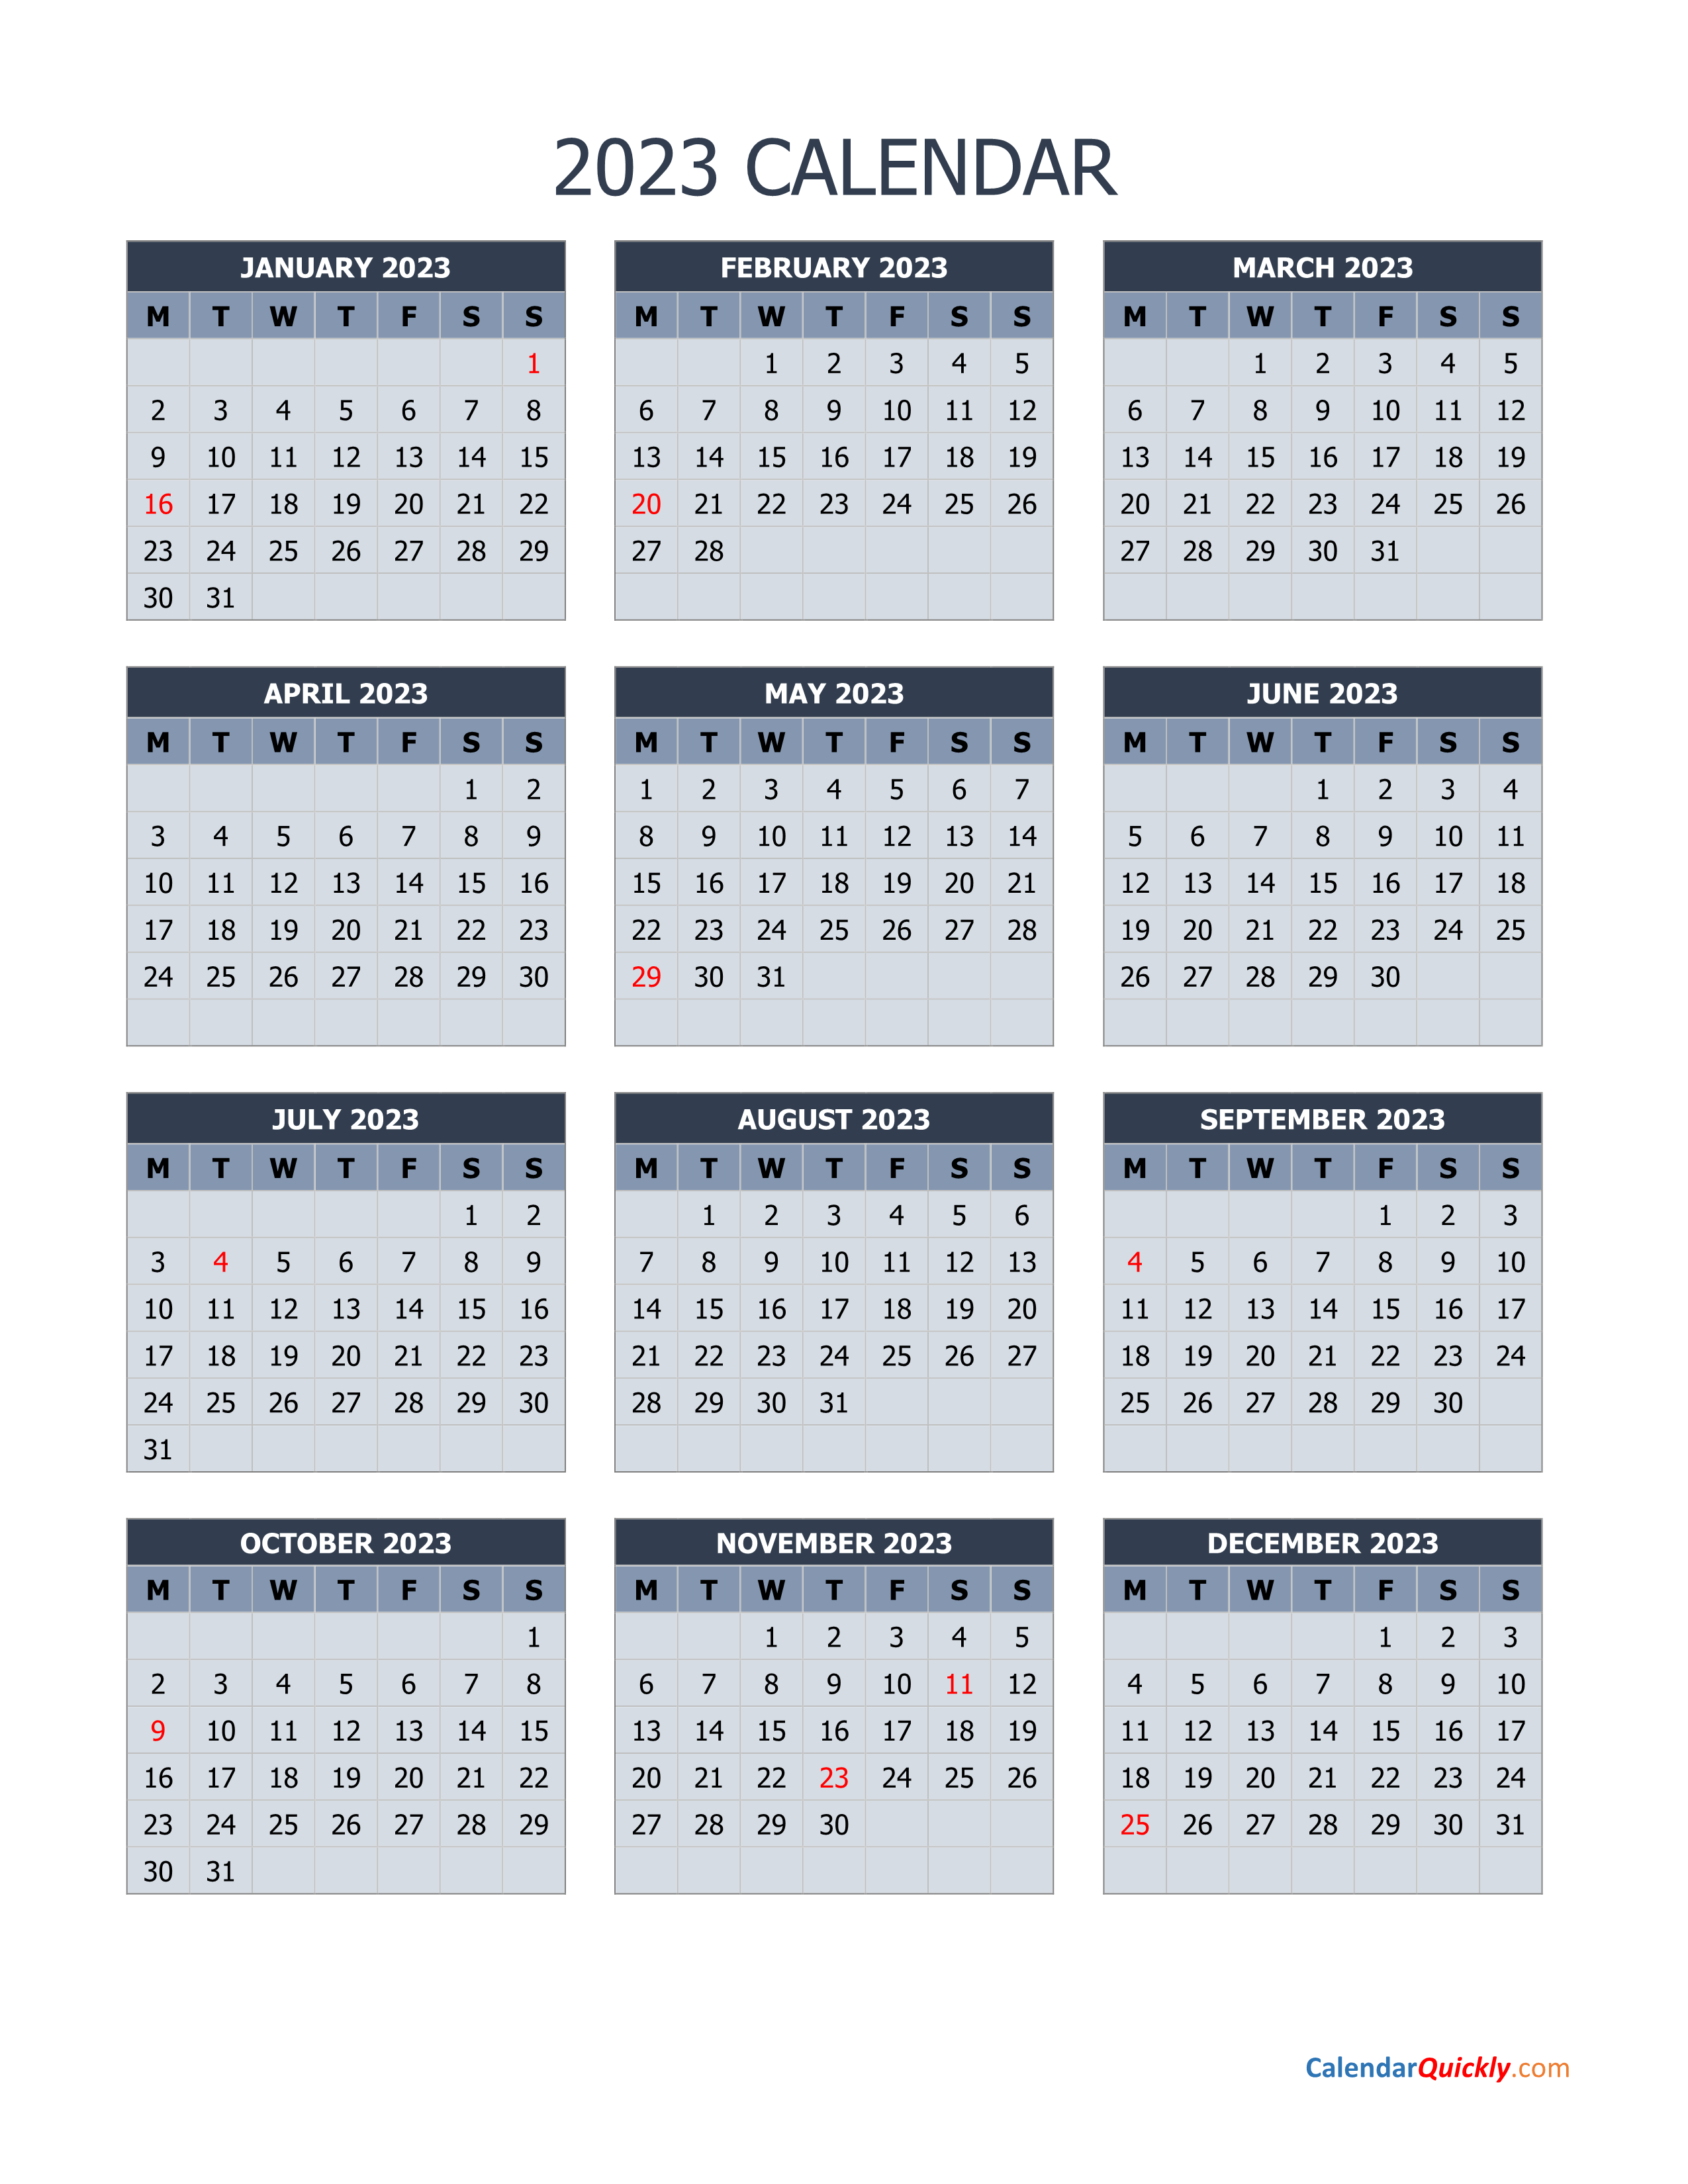 calendars-that-work-2023-time-and-date-calendar-2023-canada